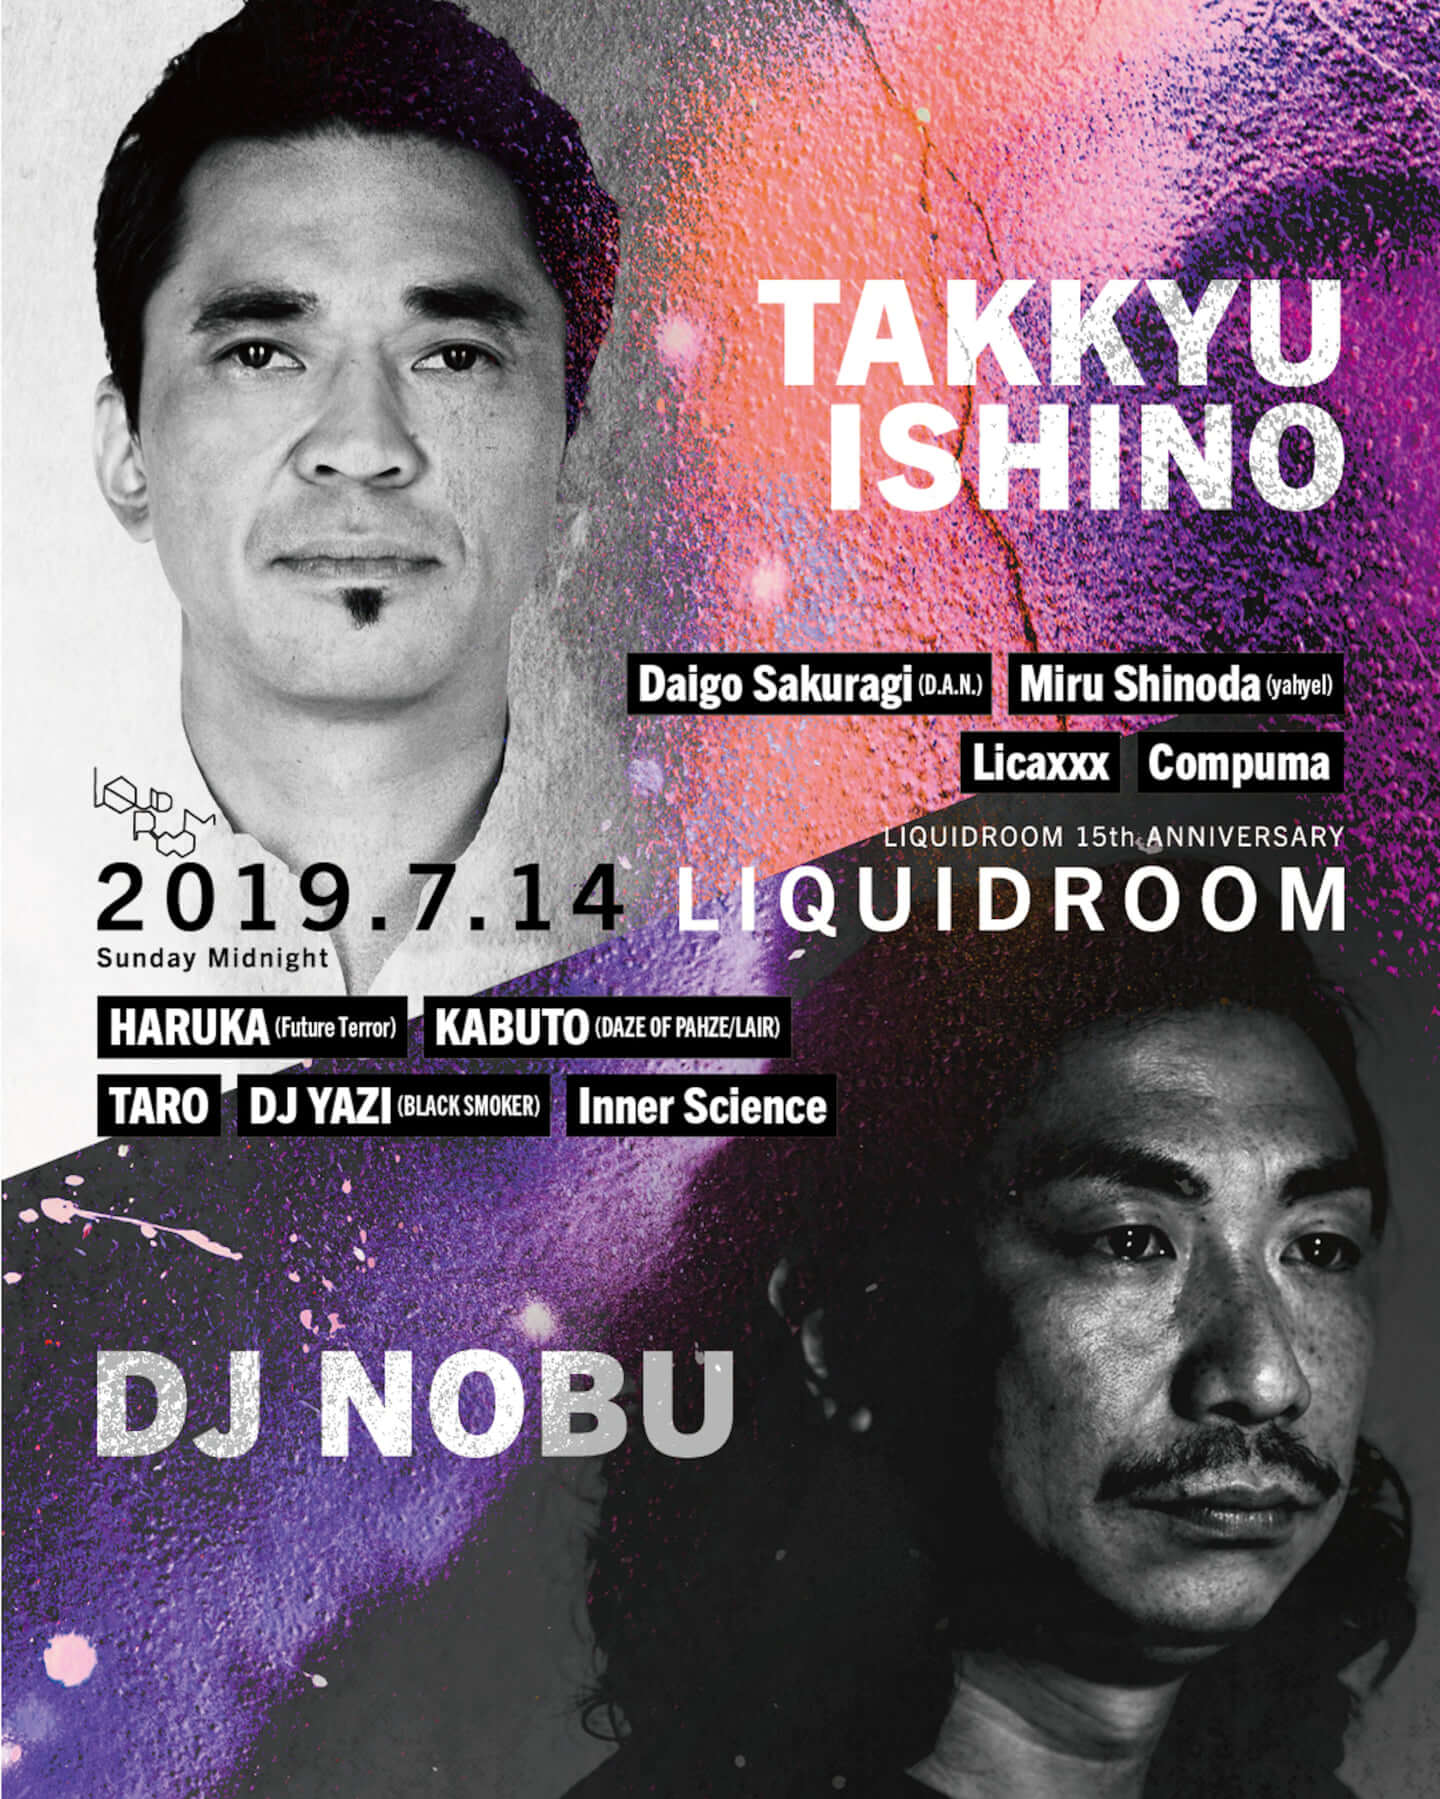 TAKKYU ISHINO × DJ NOBU